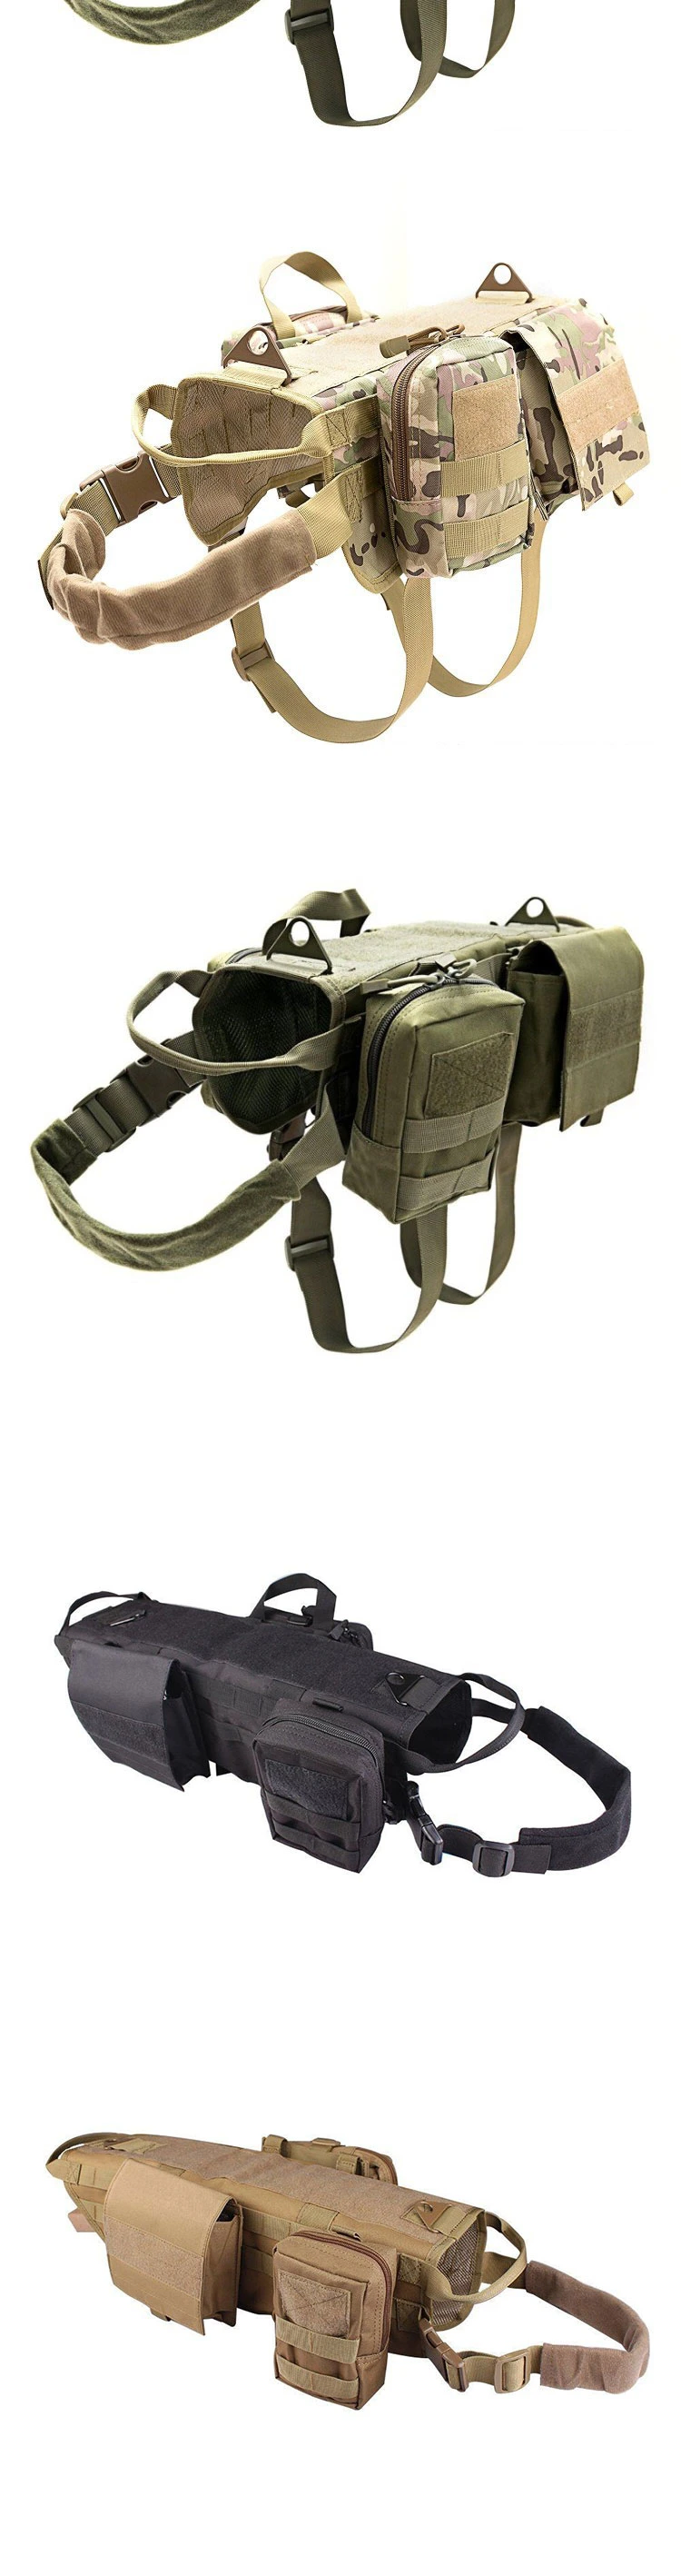 Babot Large Dog Tactical Dog Vest Suit Tactical Dog Training Equipment Dog Combat Clothing Vest